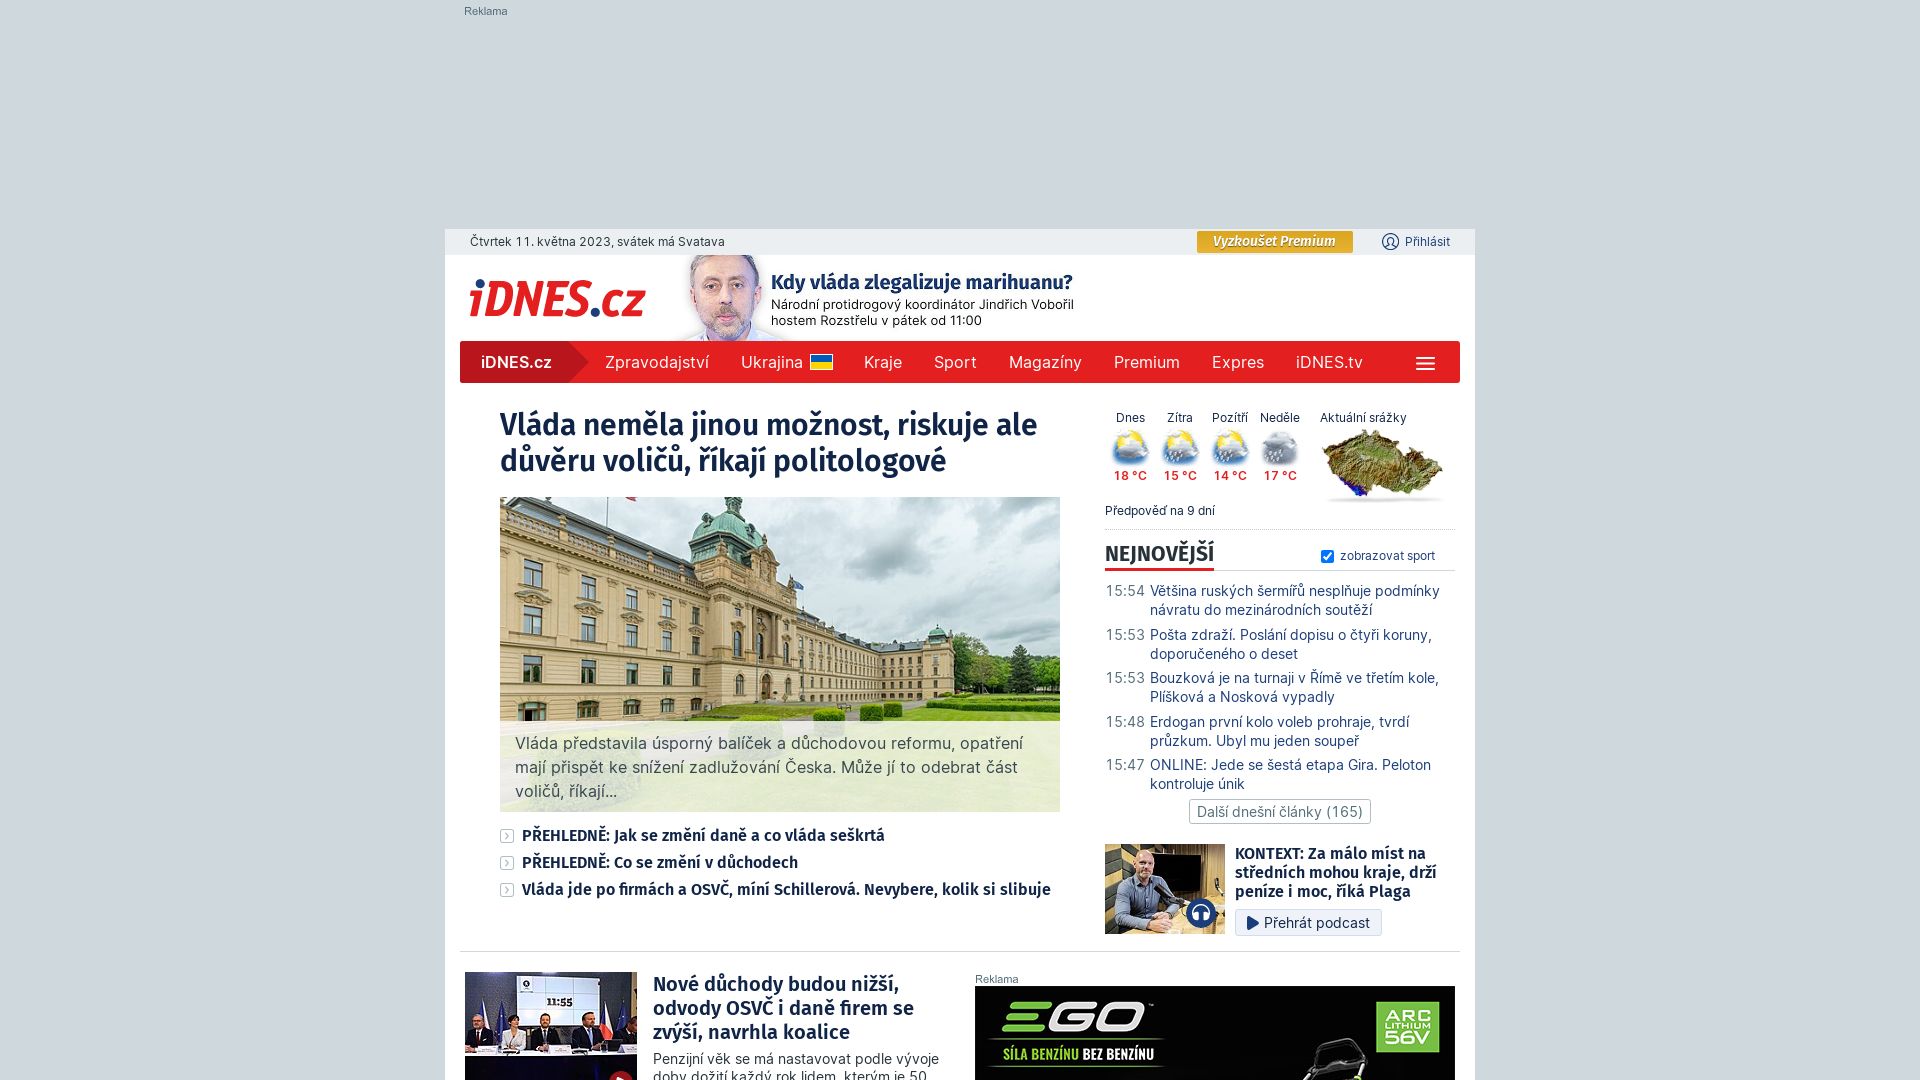 Website status idnes.cz is   ONLINE